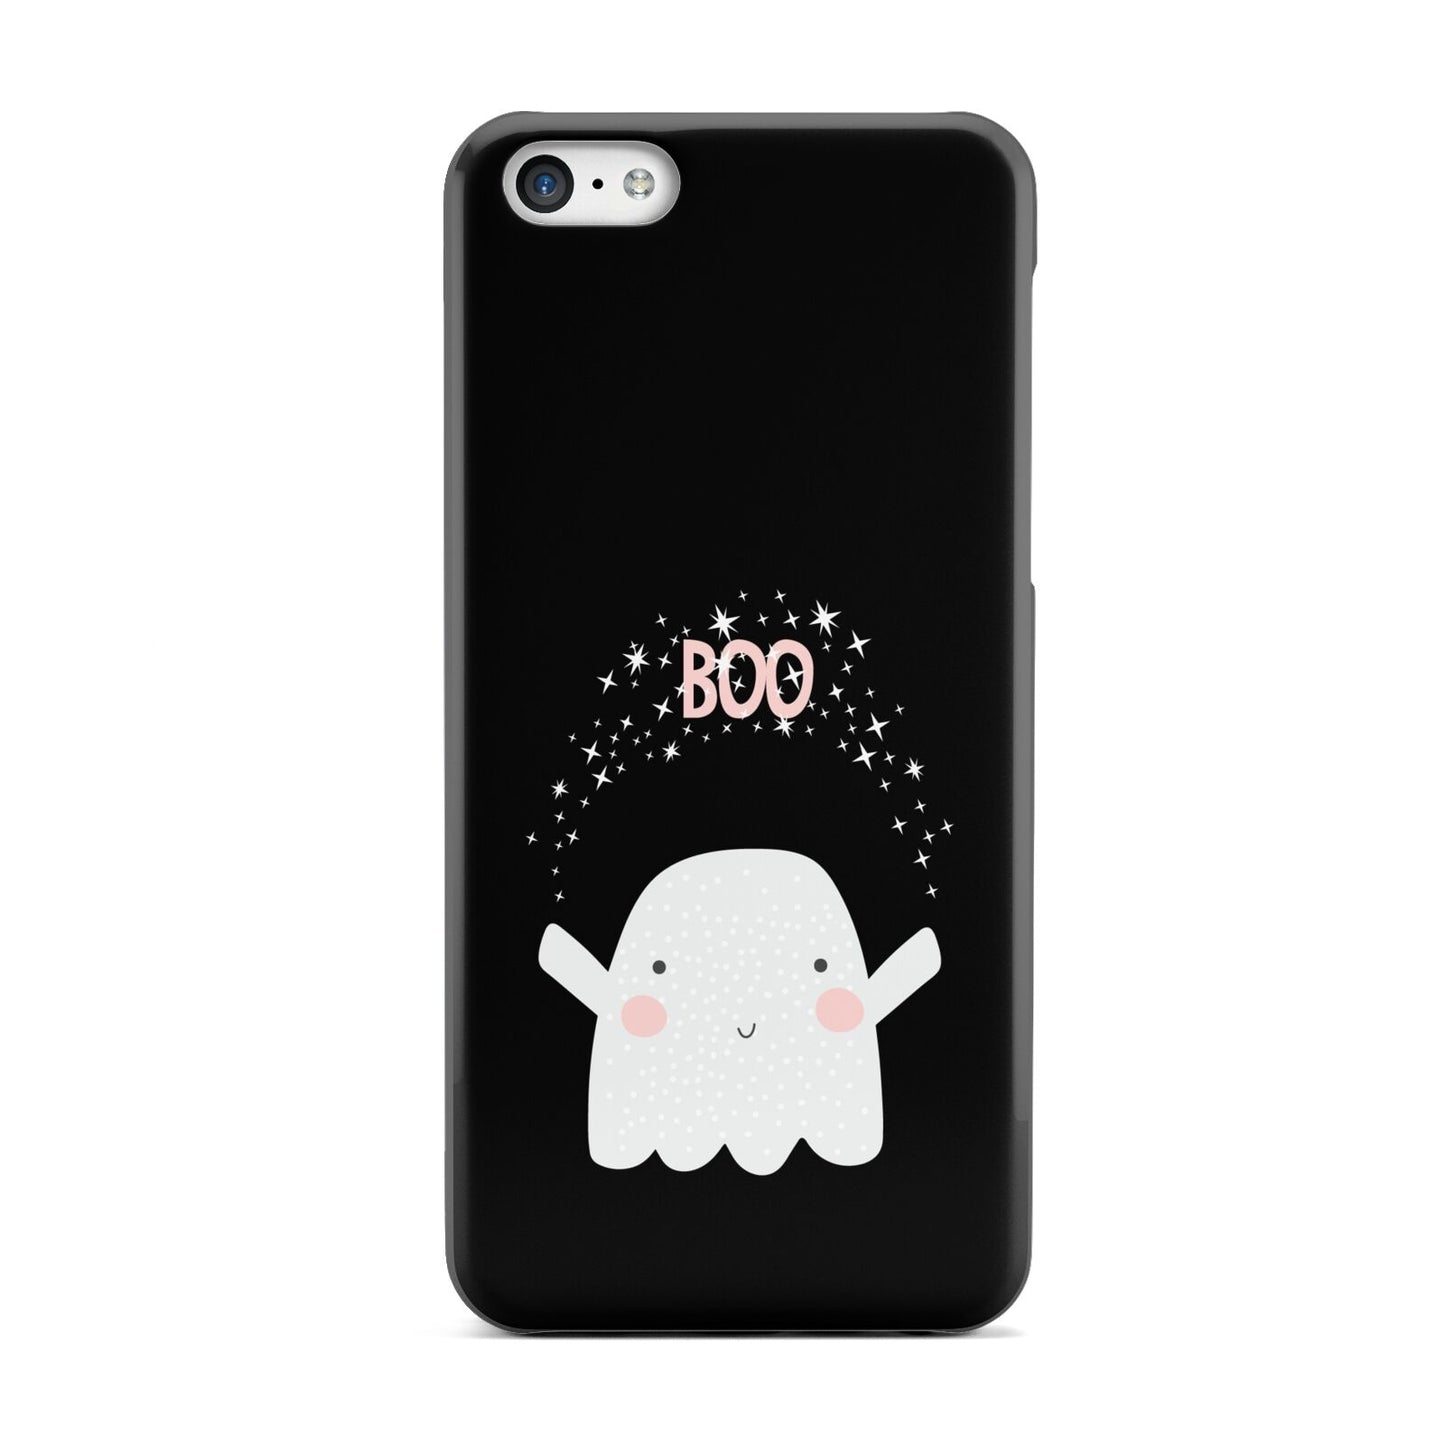 Magical Ghost Apple iPhone 5c Case